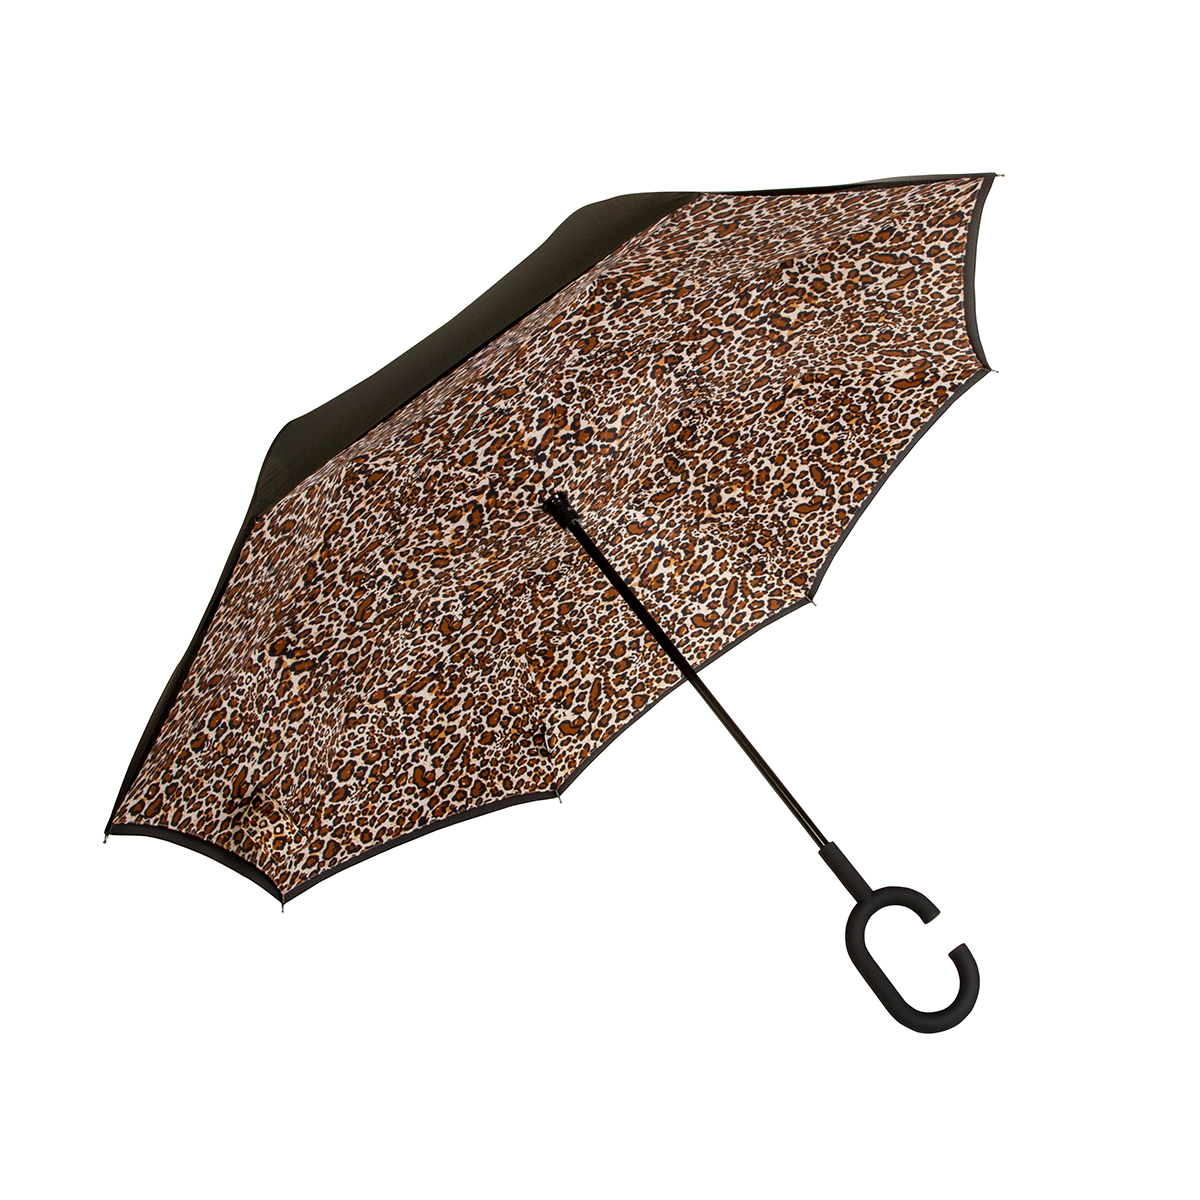 ShedRain Unbelievabrella(tm) 48in. Stick Umbrella - Black/Leopard